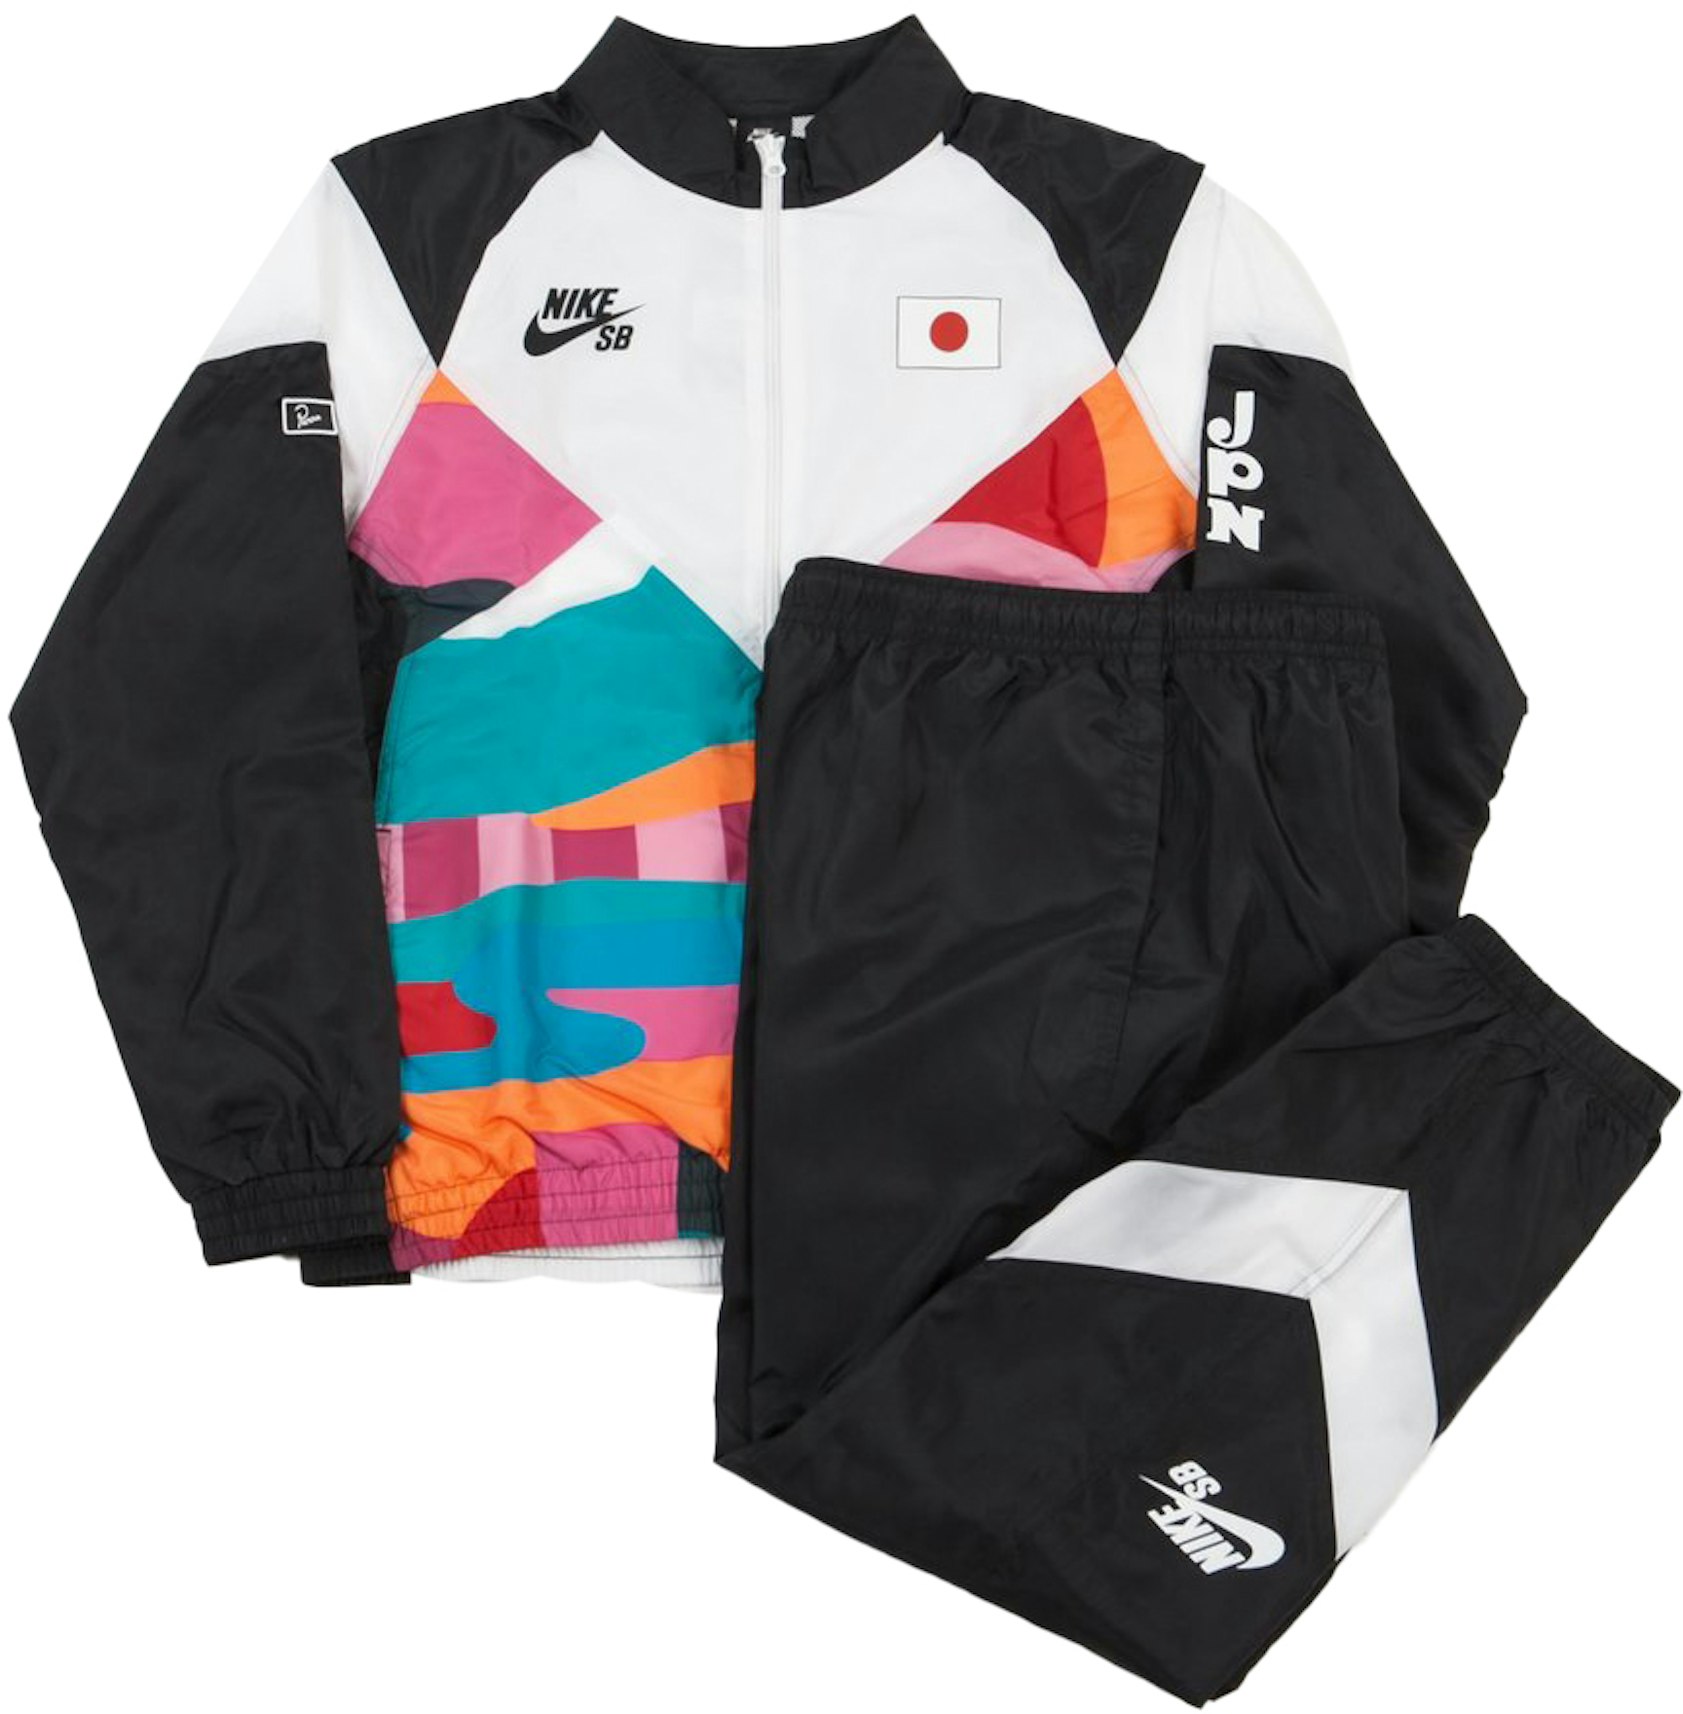 Nike SB x Parra Japan Federation Kit Skate Black/White - FW21 Men's - US